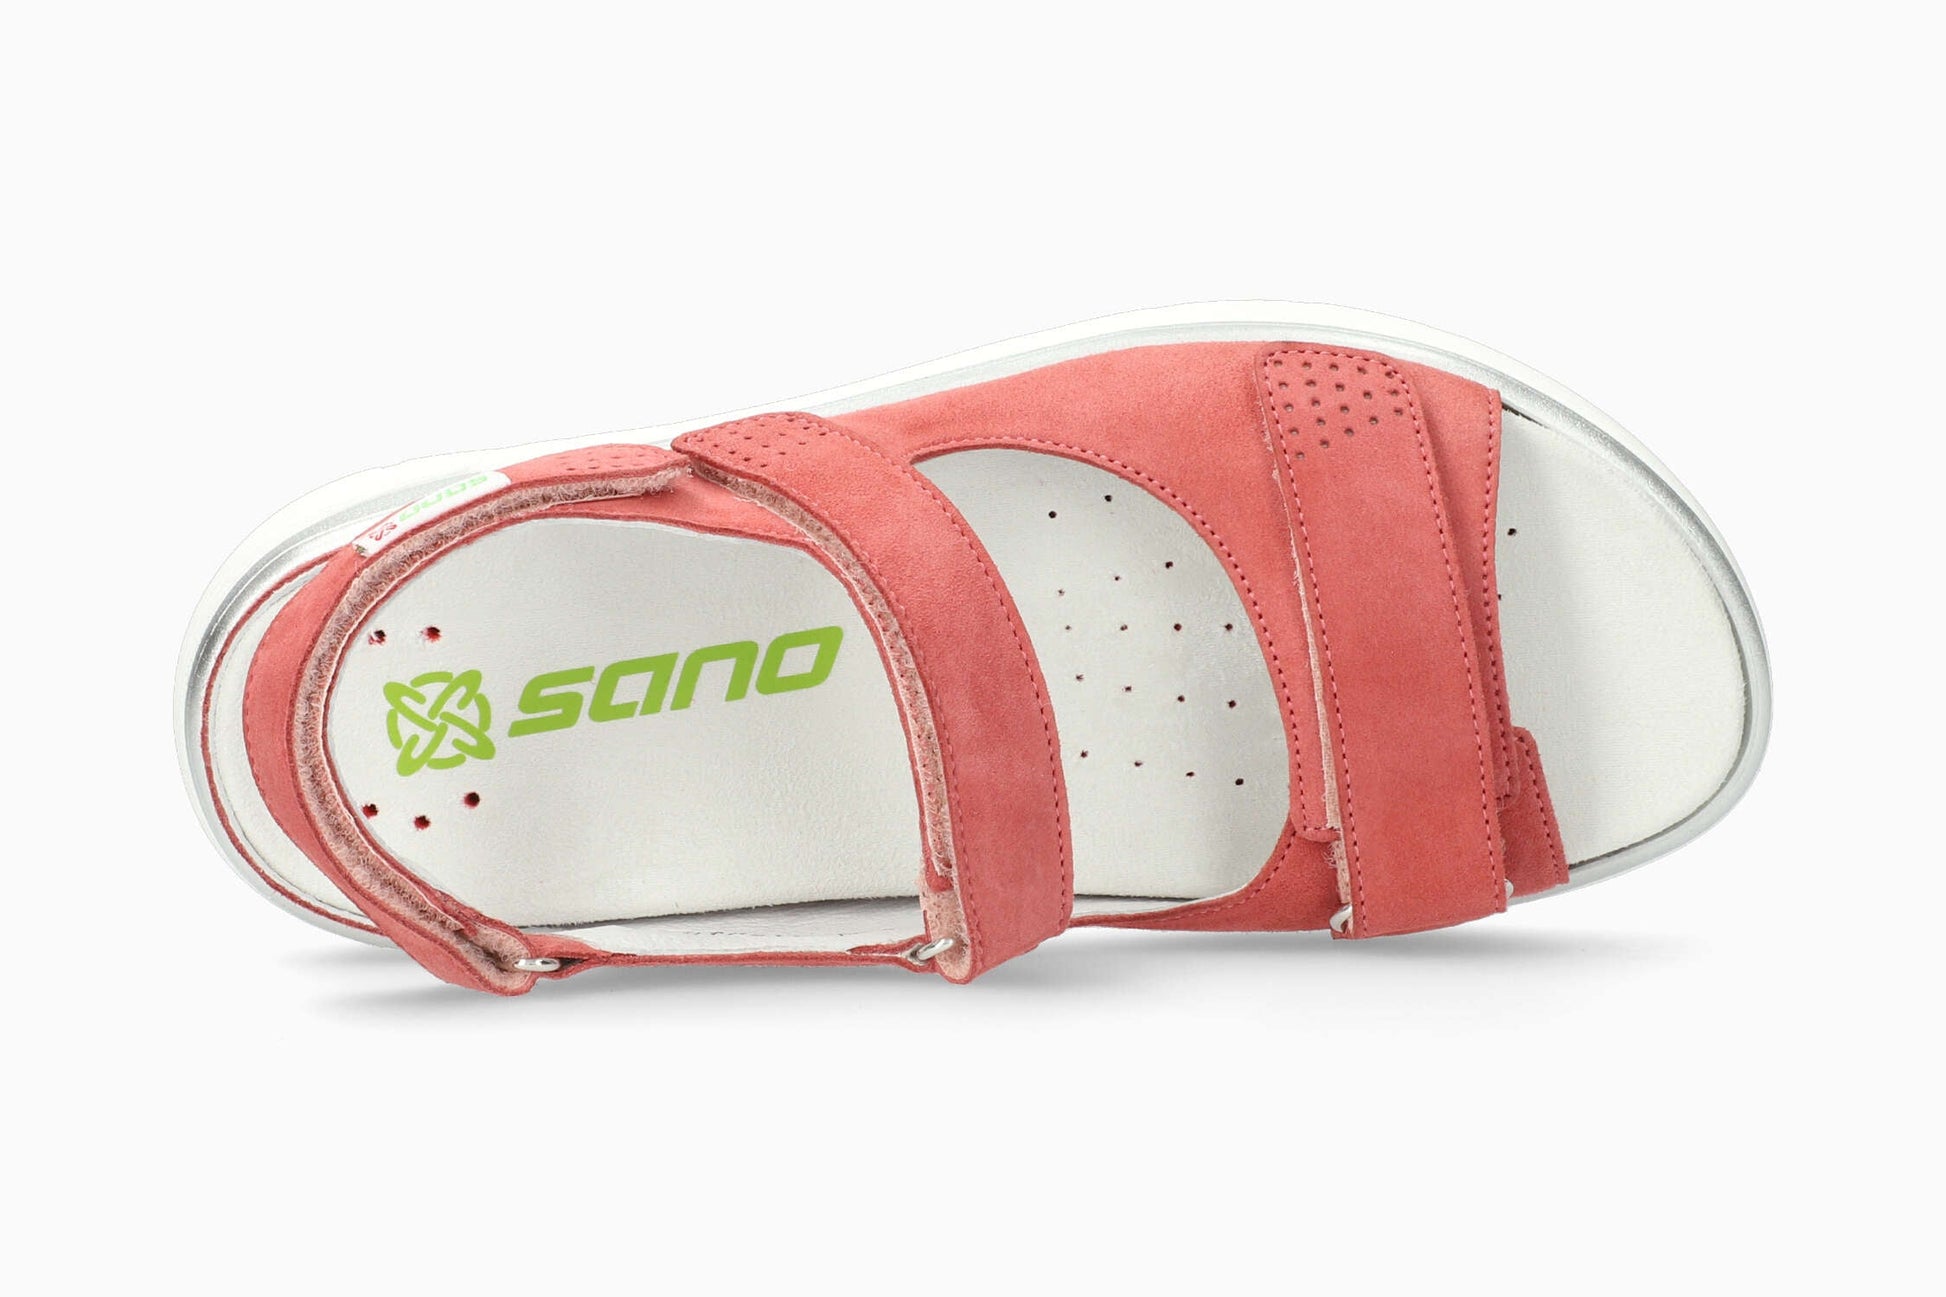 Sano Norine Old Pink Women's Sandal Top